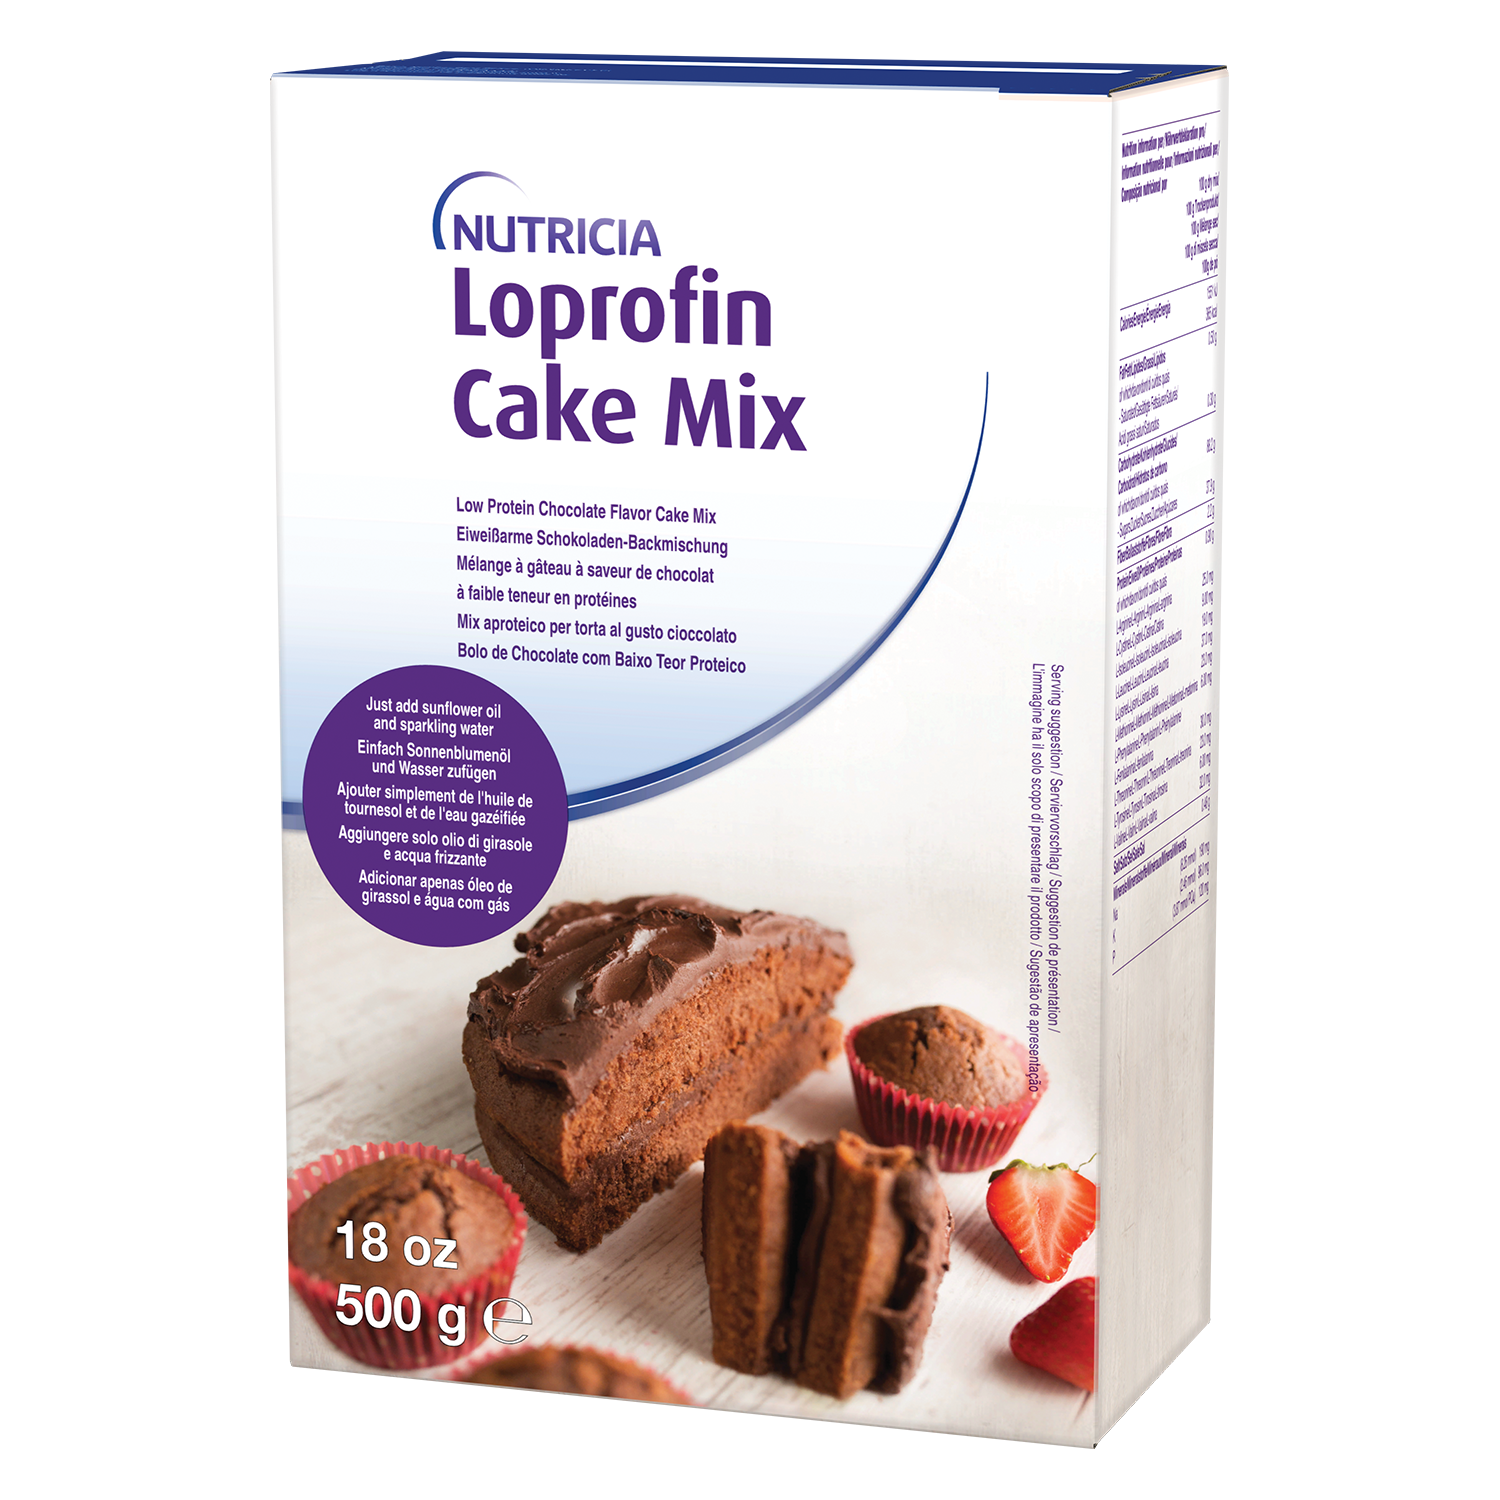 Loprofin Schokoladen-Backmischung (500g)